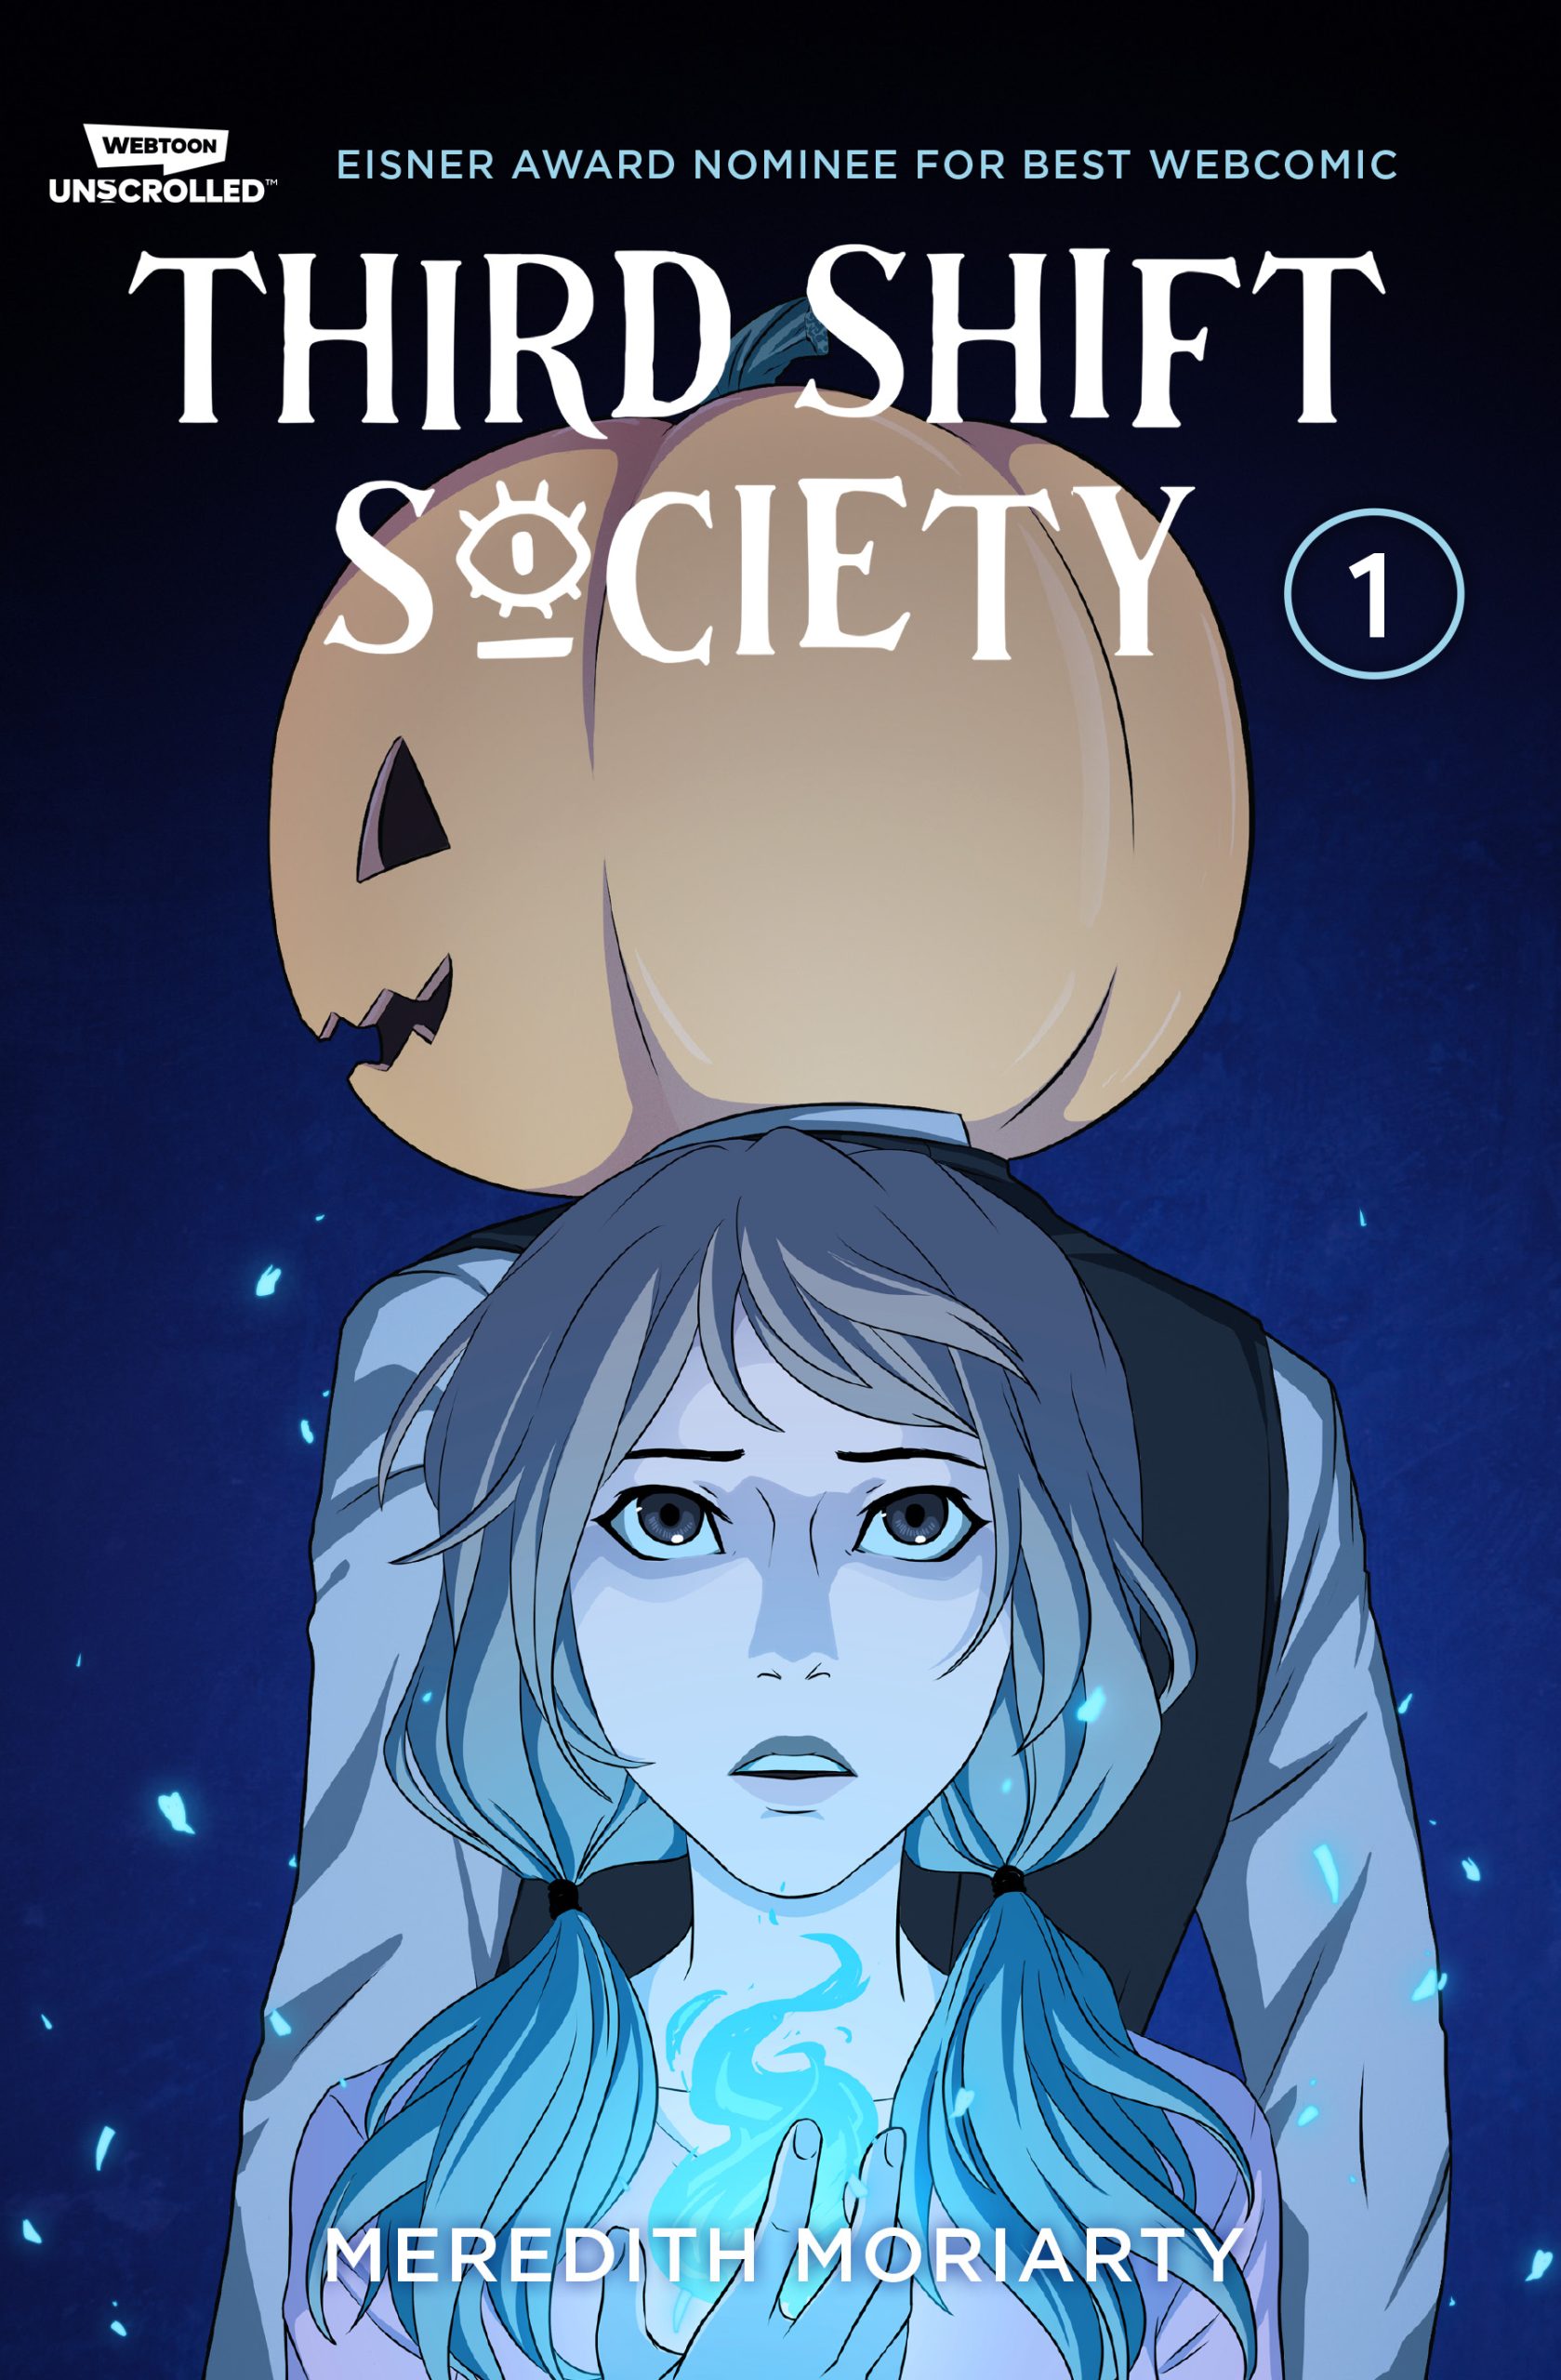 Third Shift Society cover.